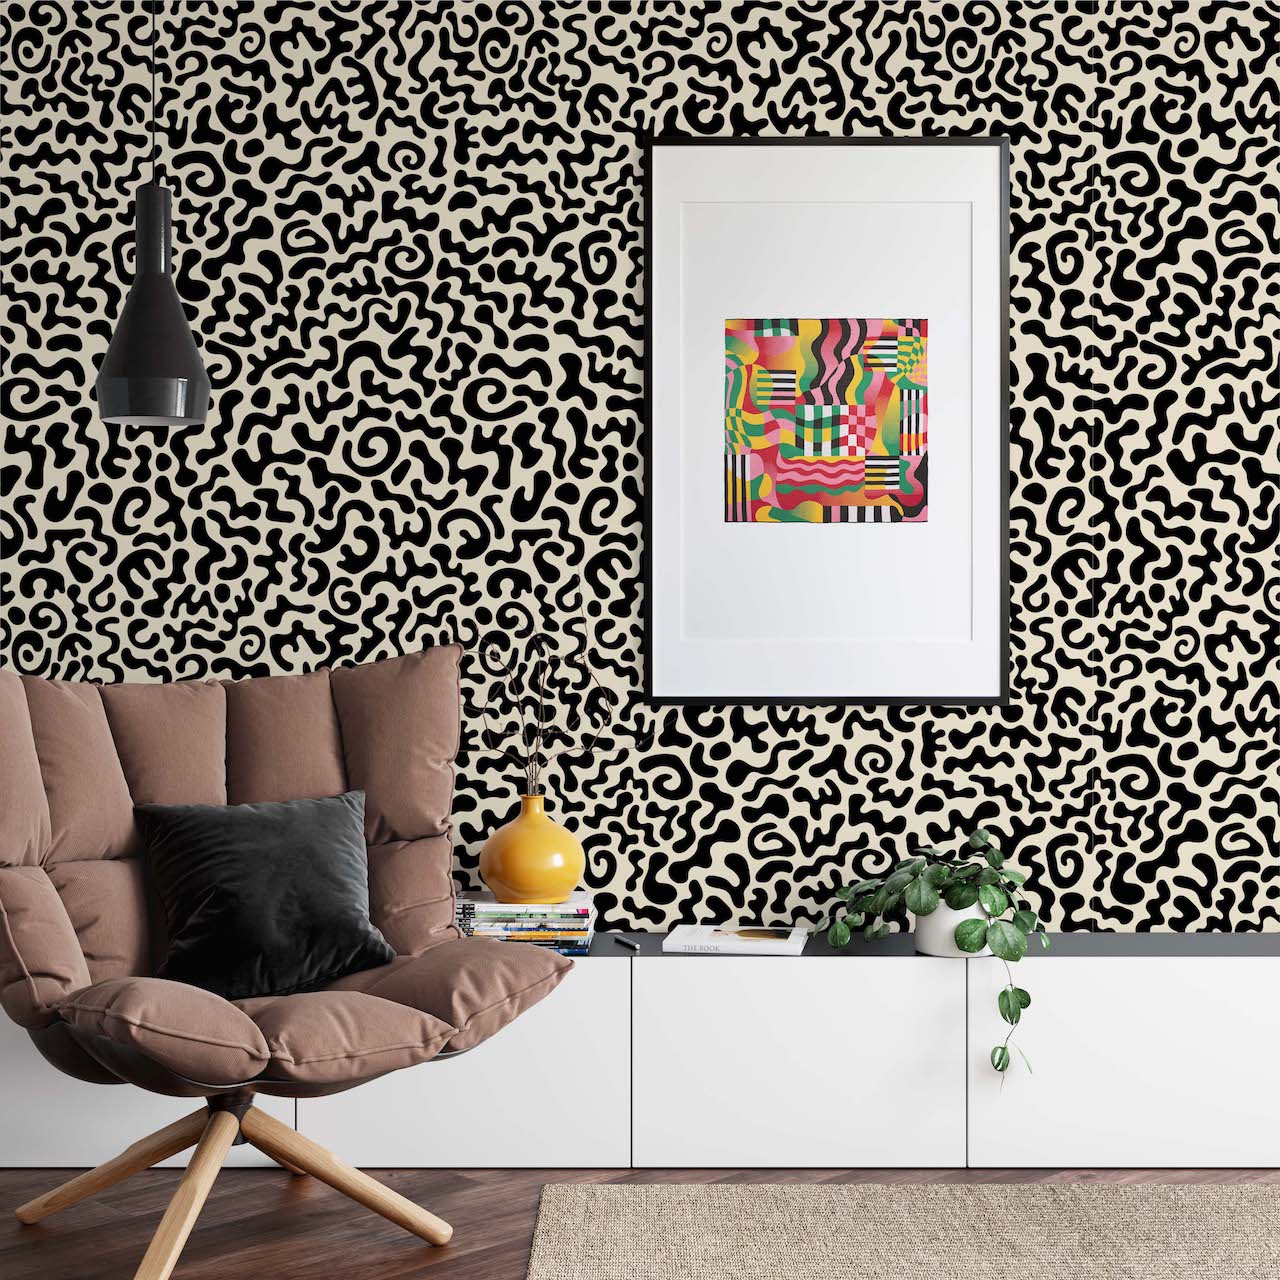 Leopard Print Impression Animal Skin Wallpaper Mural Home Interior